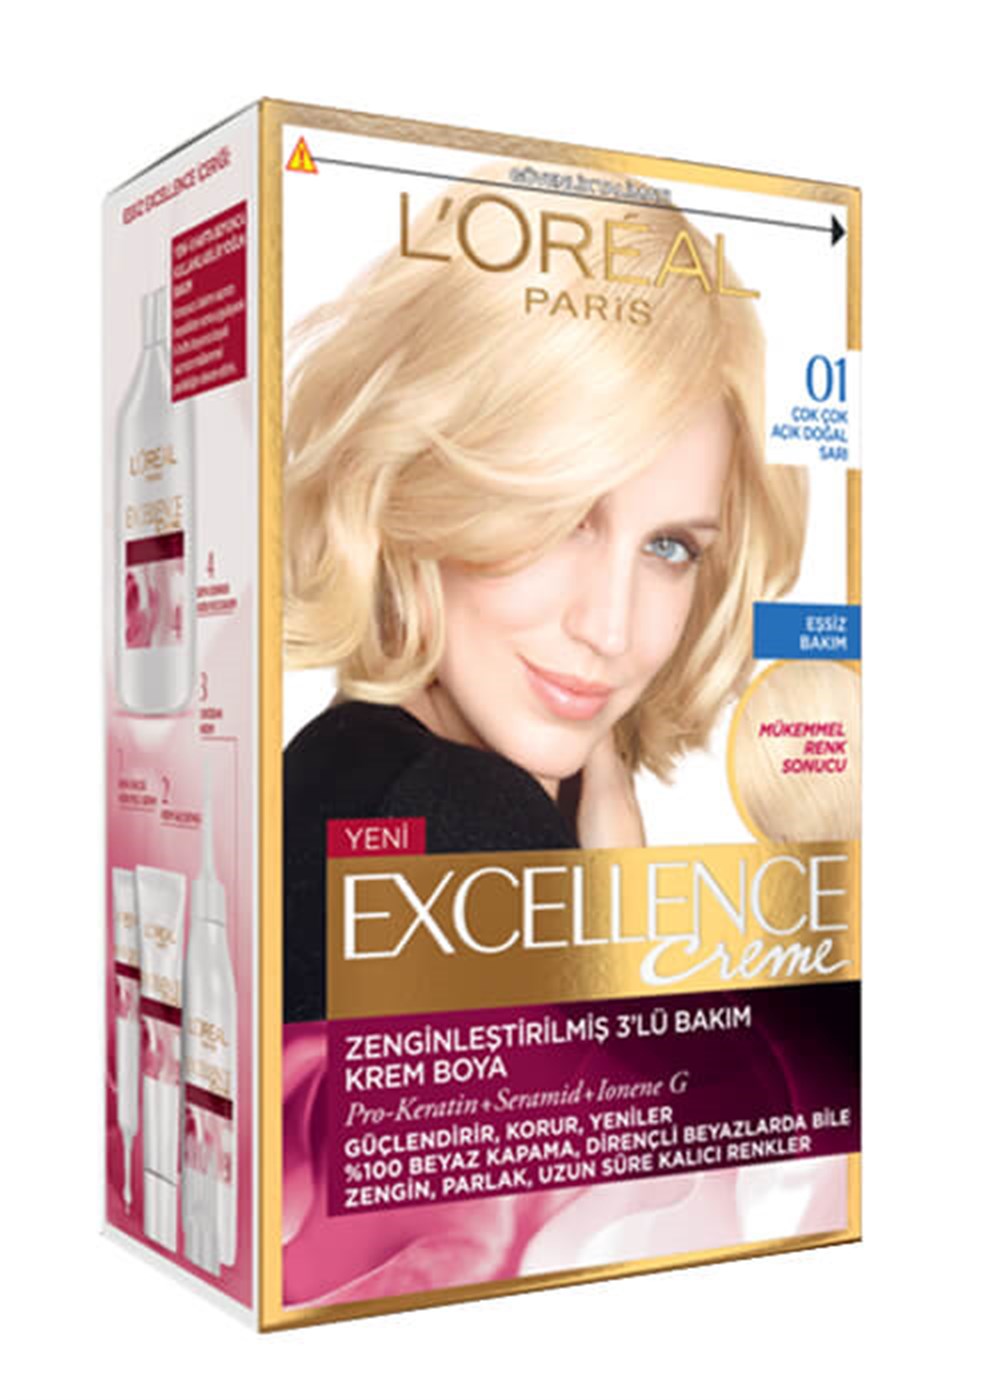 Loreal Paris Saç Boyası Excellence creme 0.1 Blonde Sup Dogal | Netegir.com